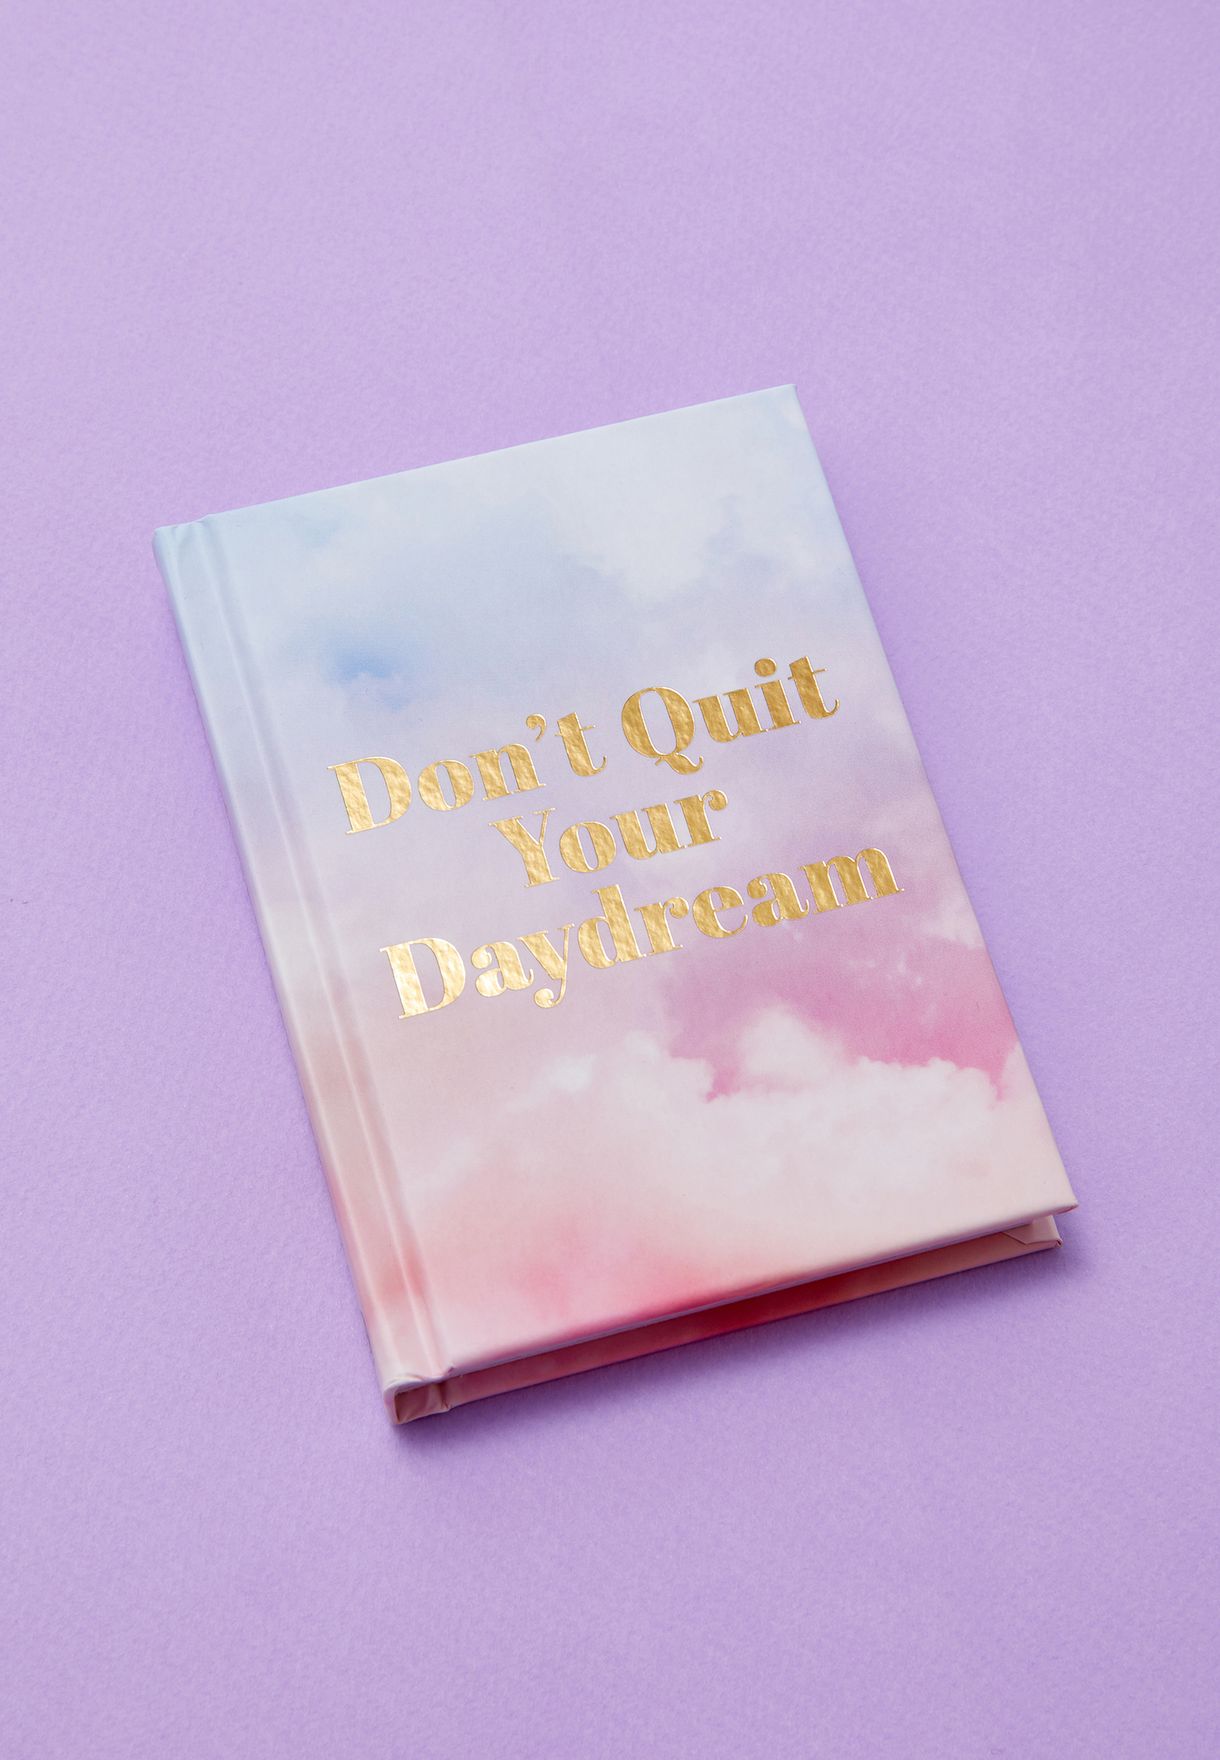 كتاب لا تهجر حلمك (Don't Quit Your Daydream)